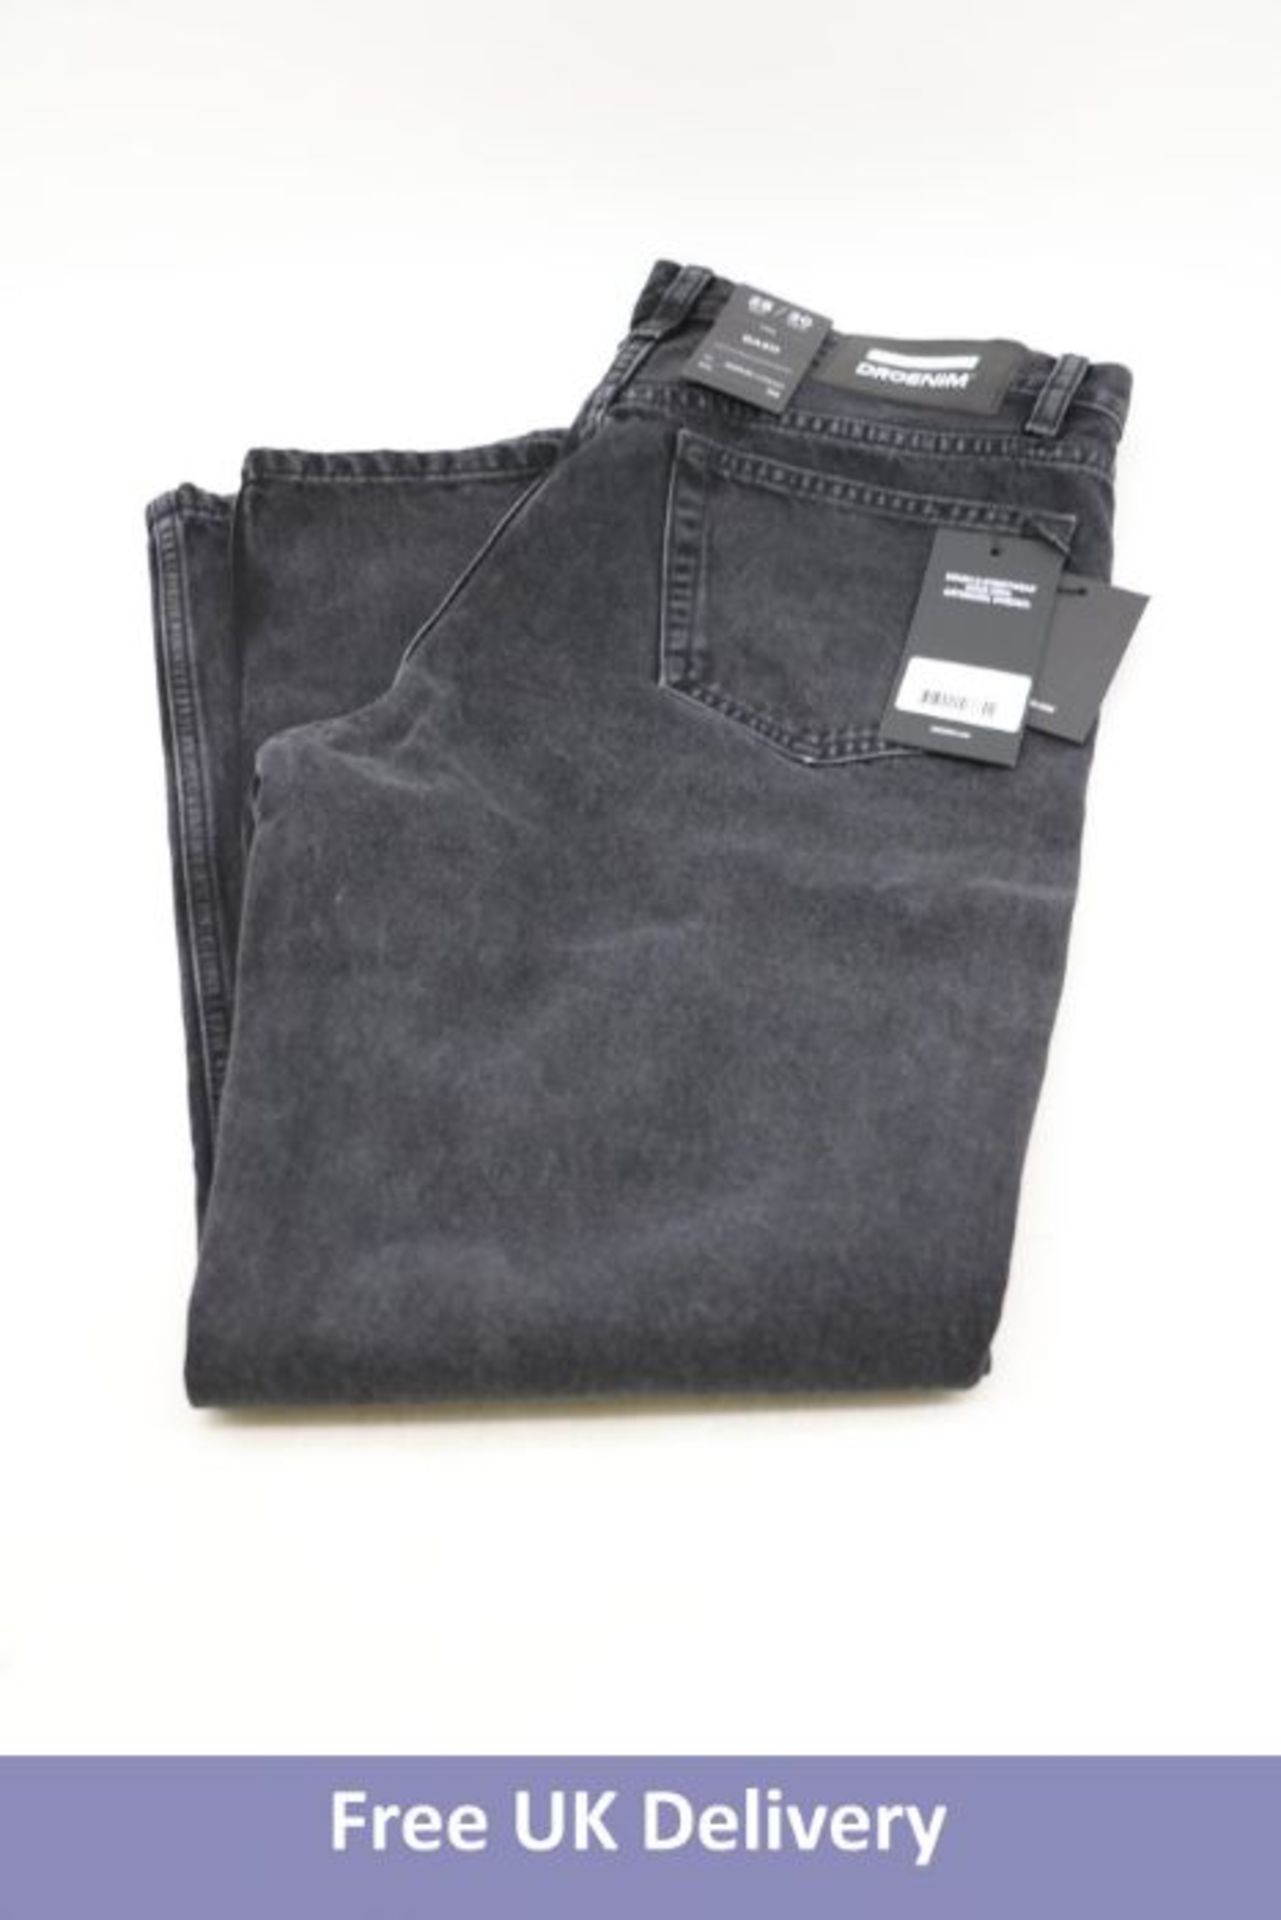 Two Dr Denim Men's Dash Night Jeans, Black, 1x Size W33 L32, 1x Size W34 L34 - Image 2 of 2